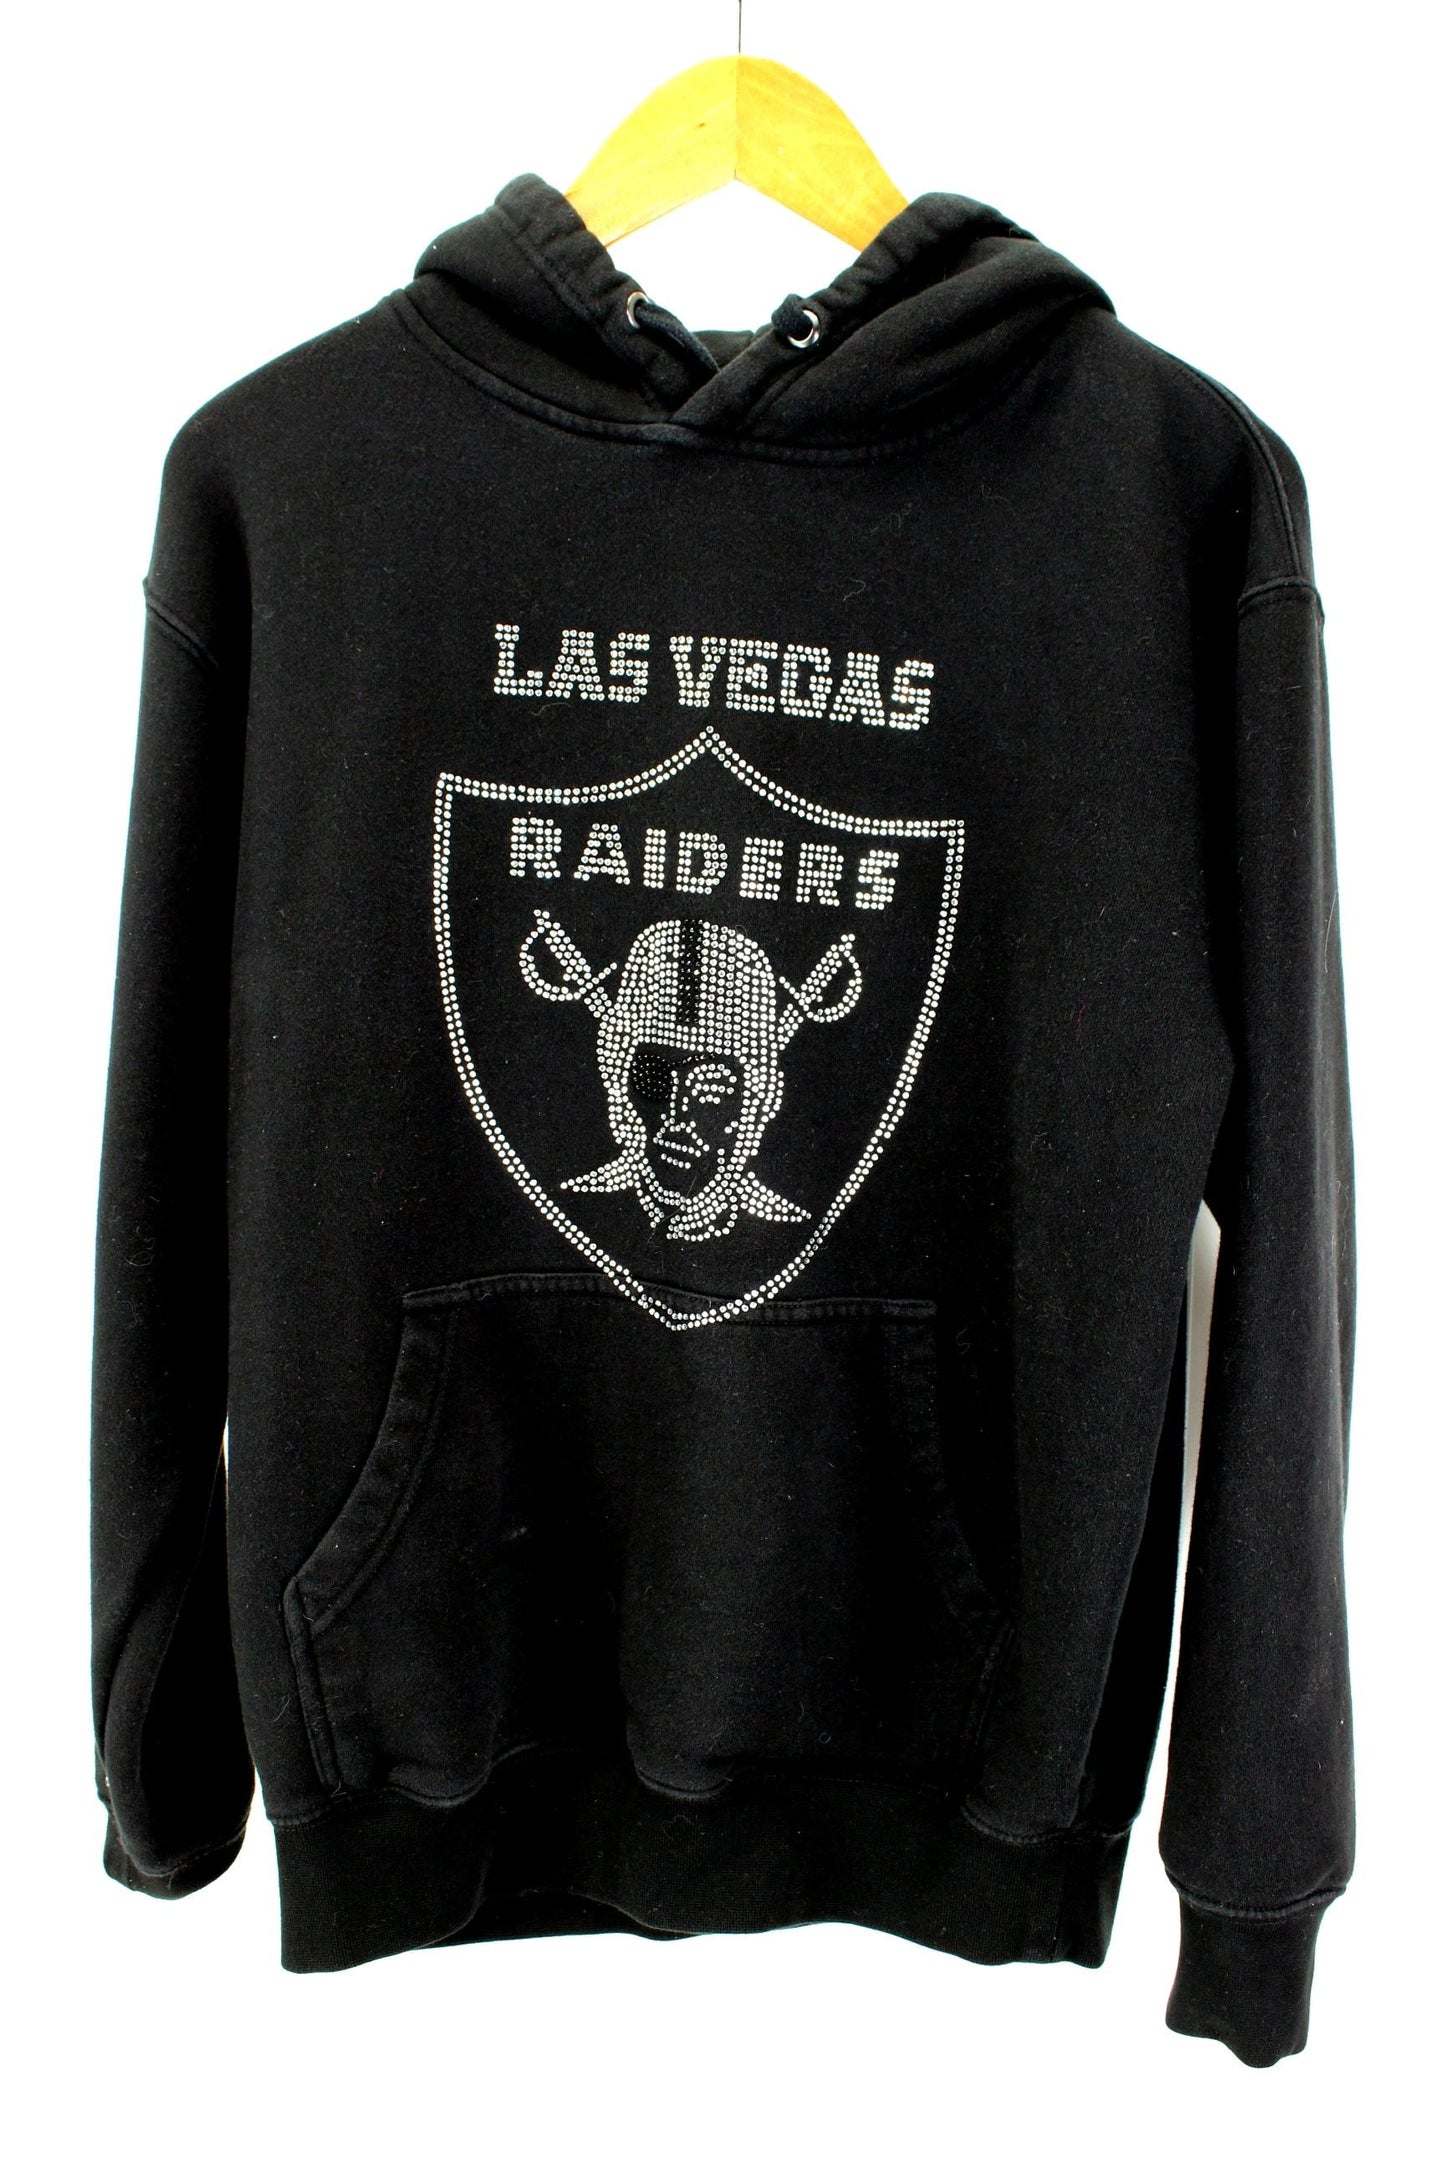 Las Vegas Raiders Sparkly Hoodie Sweatshirt - Pro BP Black Cotton Poly